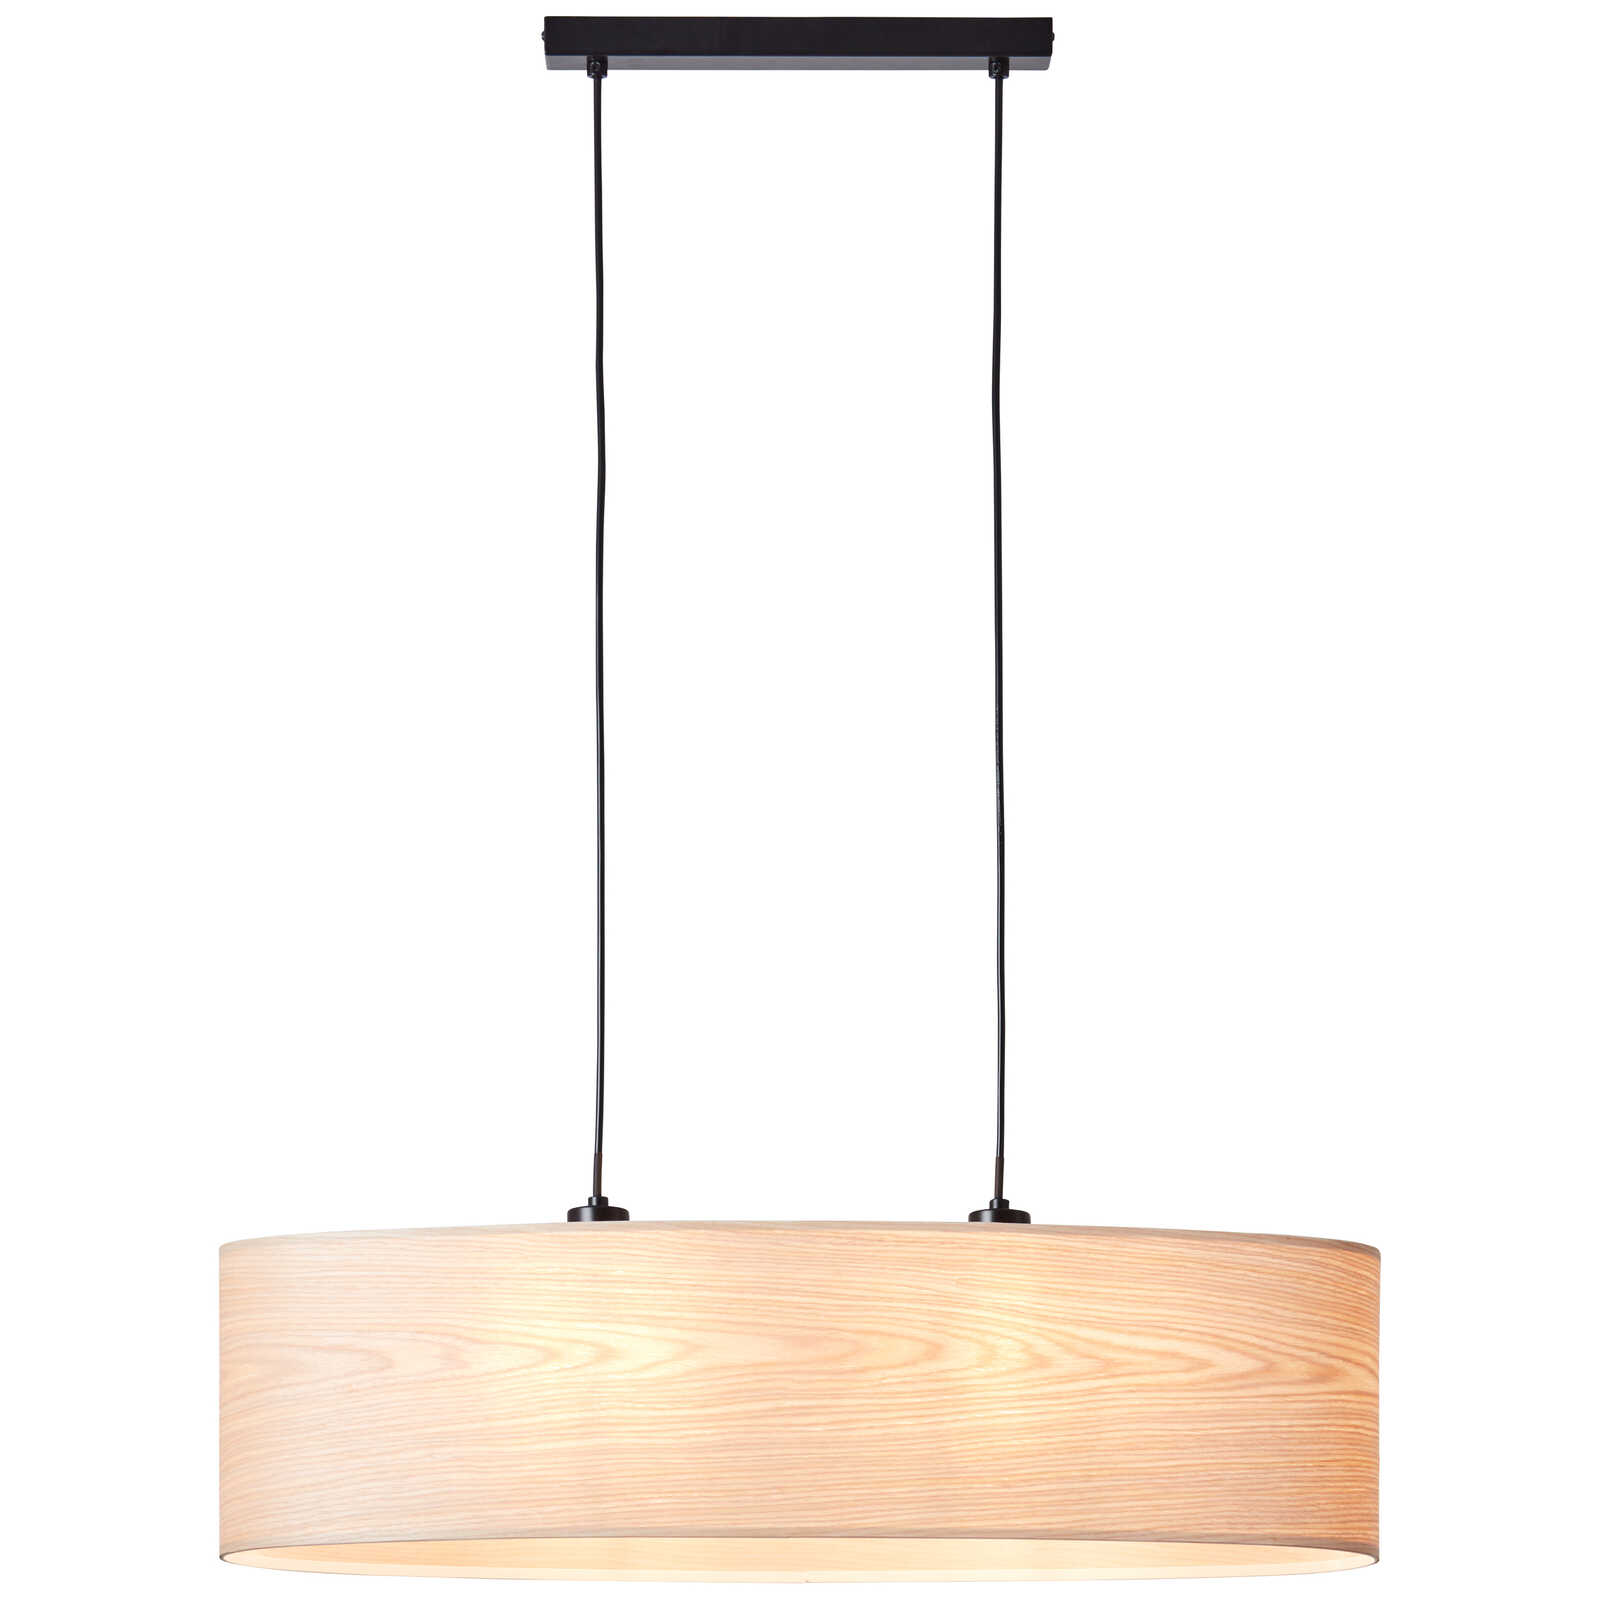             Lámpara colgante de madera - Michael 3 - Beige
        